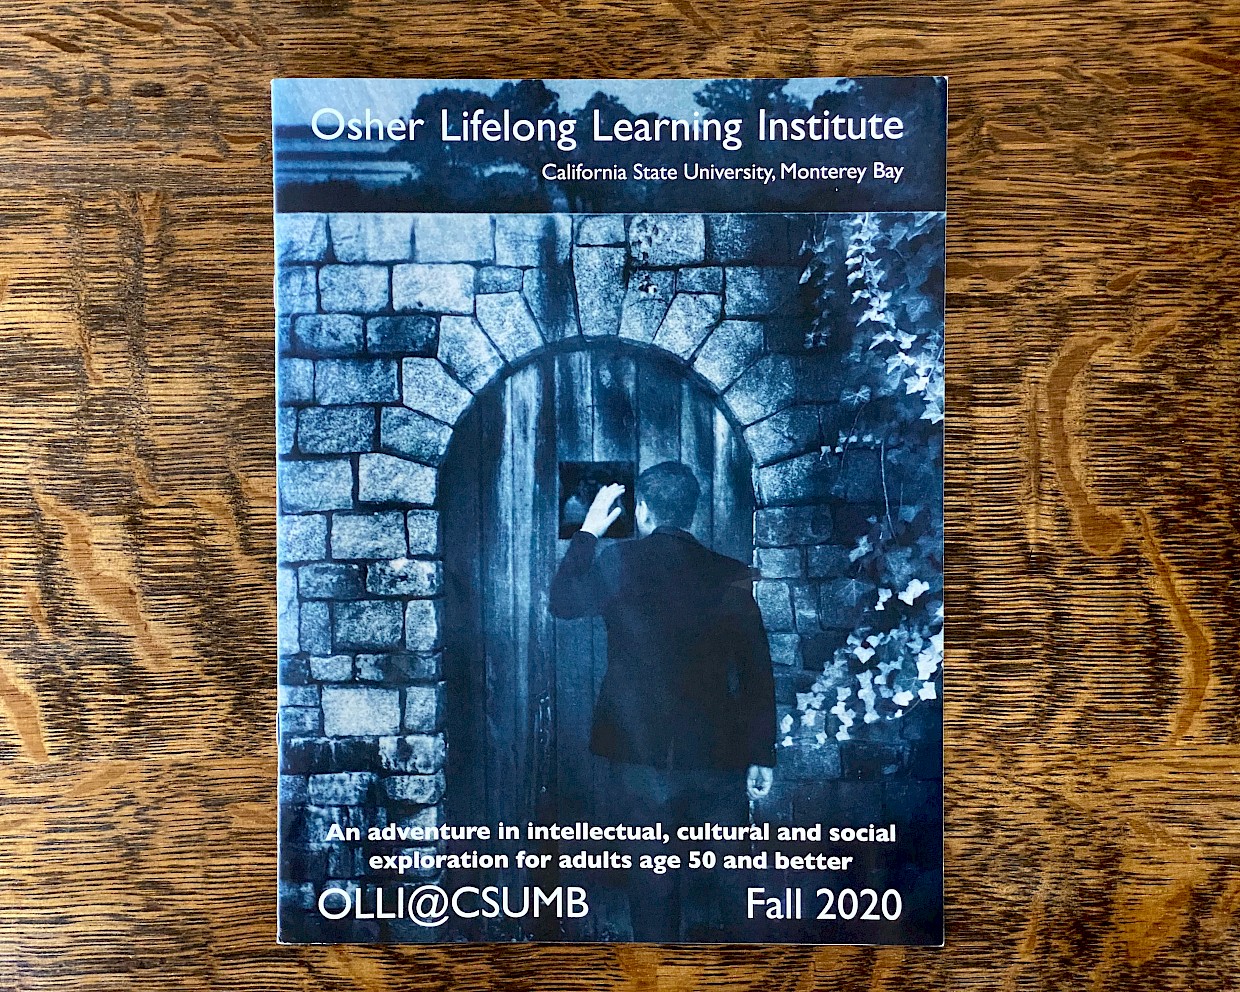 Jonah Calinawan cyanotype featured in Osher Lifelong Learning Institute catalog